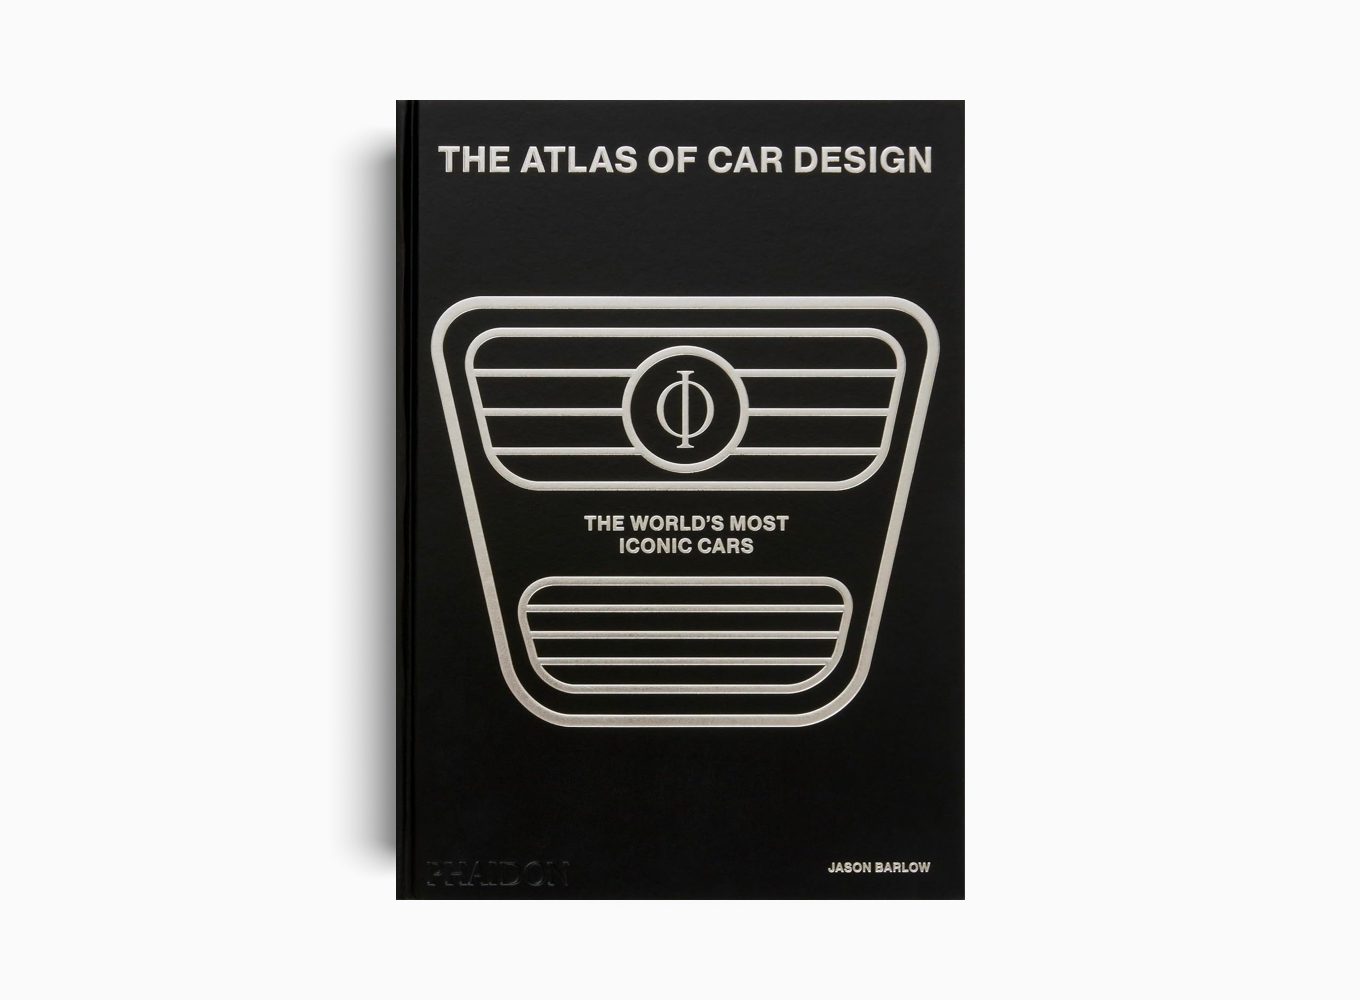 THE ATLAS OF CAR DESIGN